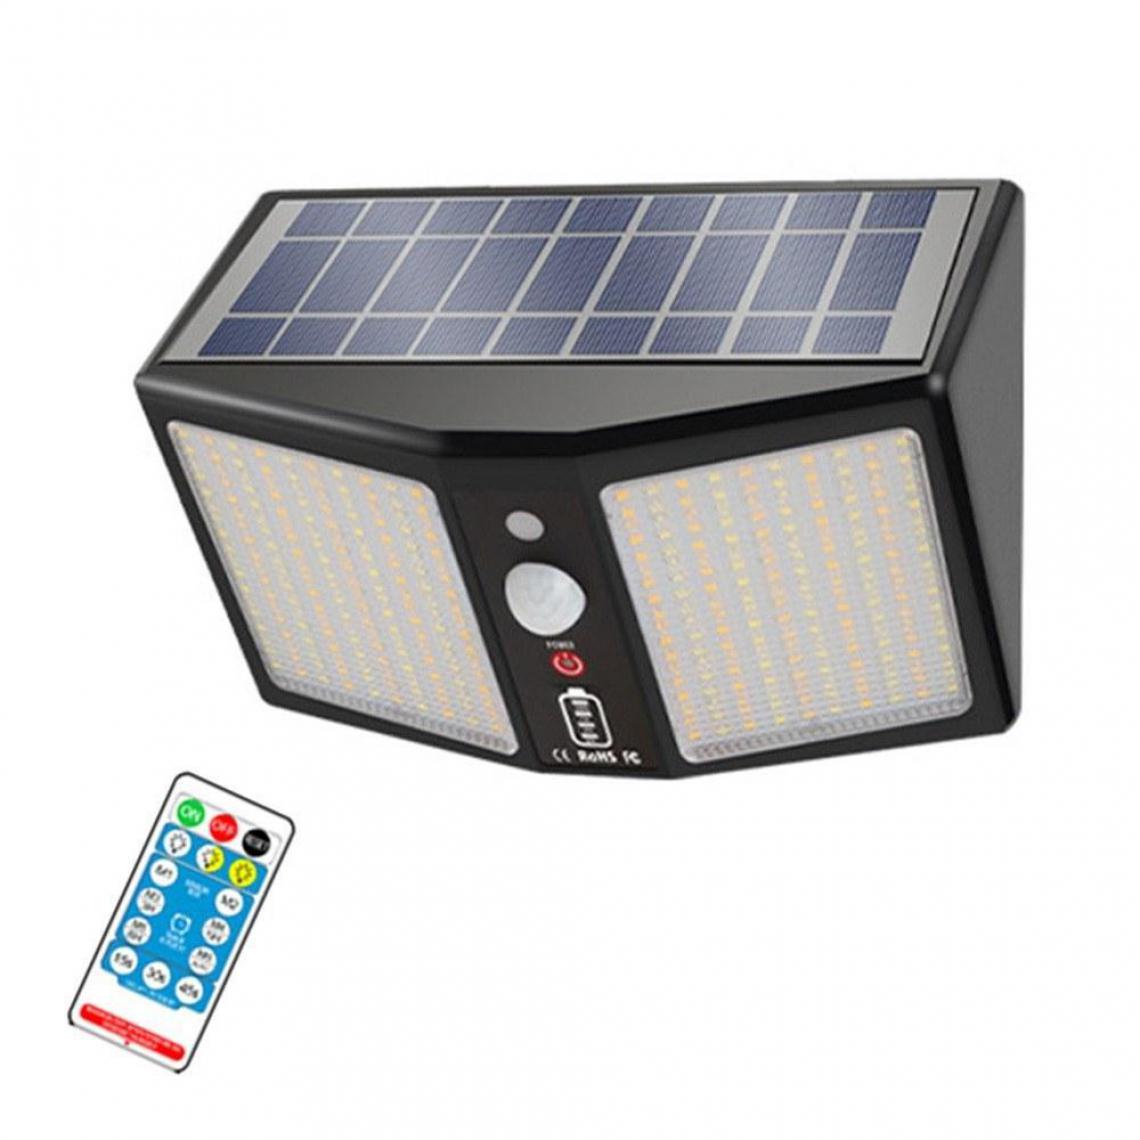 Justgreenbox - Lampe murale solaire IP65 Installation de montage/accrochage - T6112211962993 - Eclairage solaire